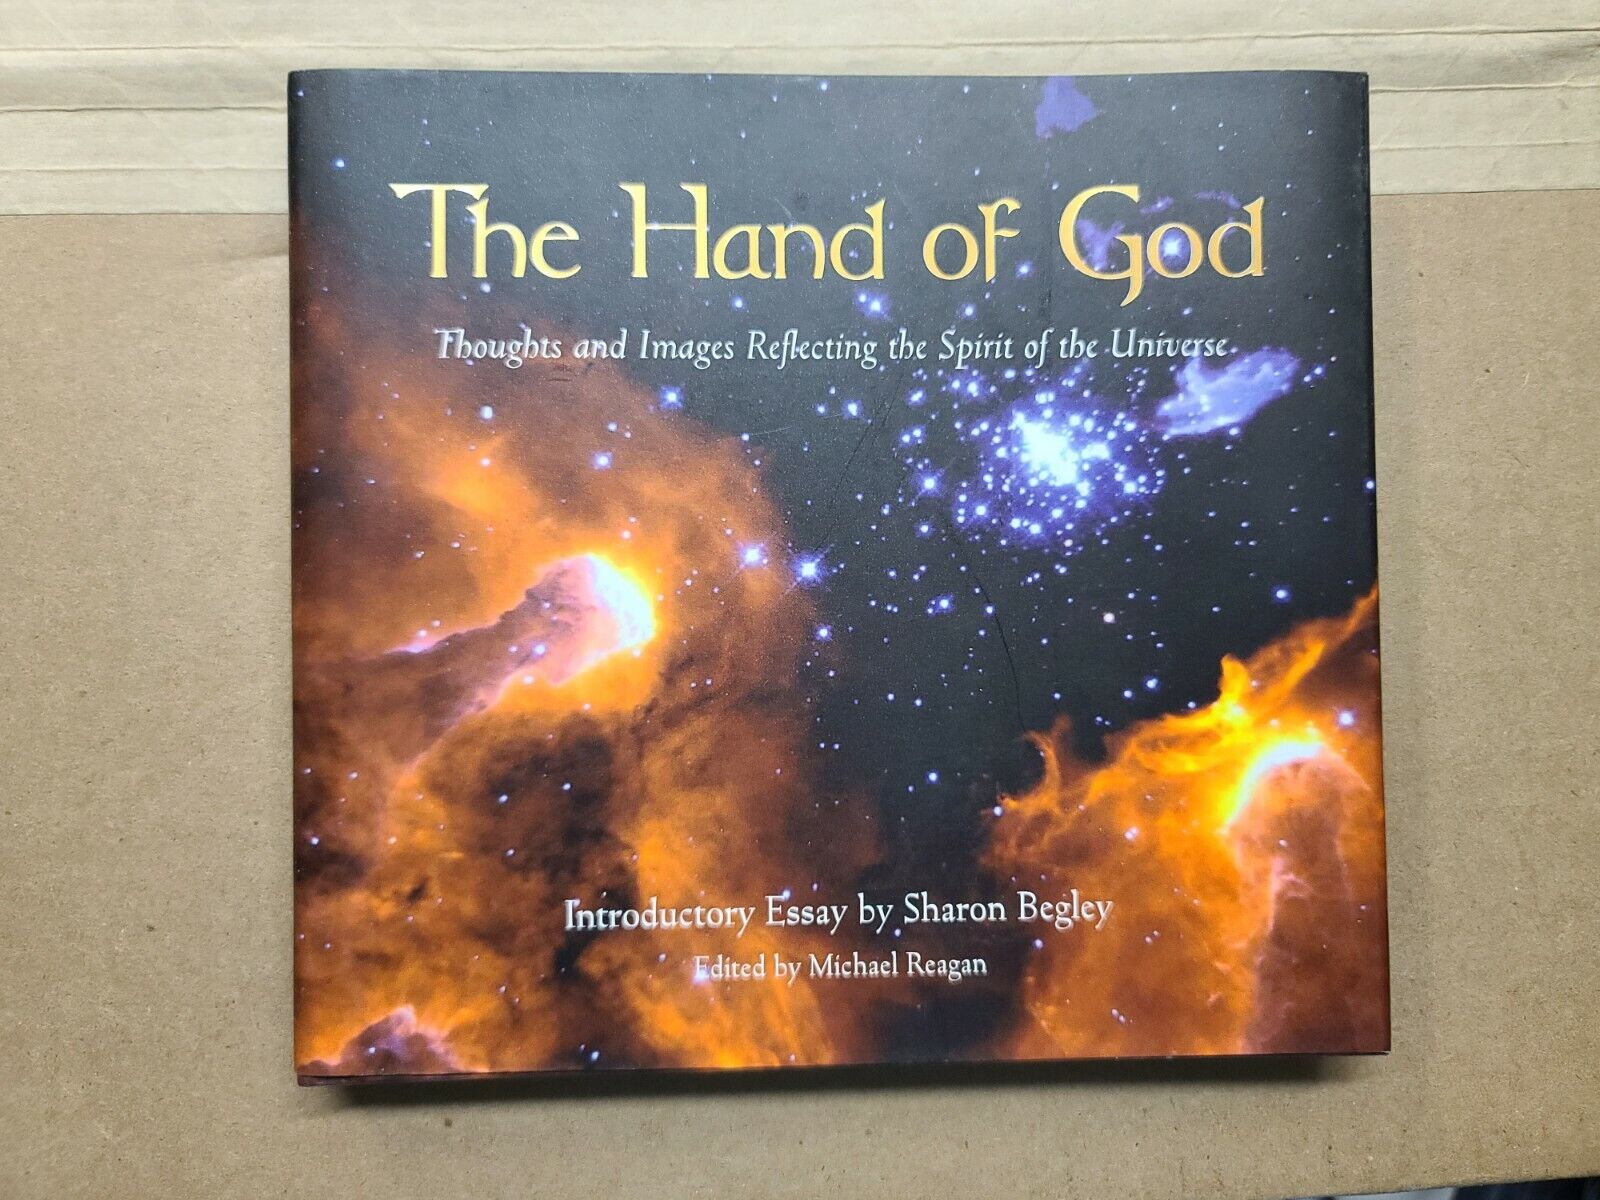 The Hand of God by Sharon Begley 9780740703232 | eBay